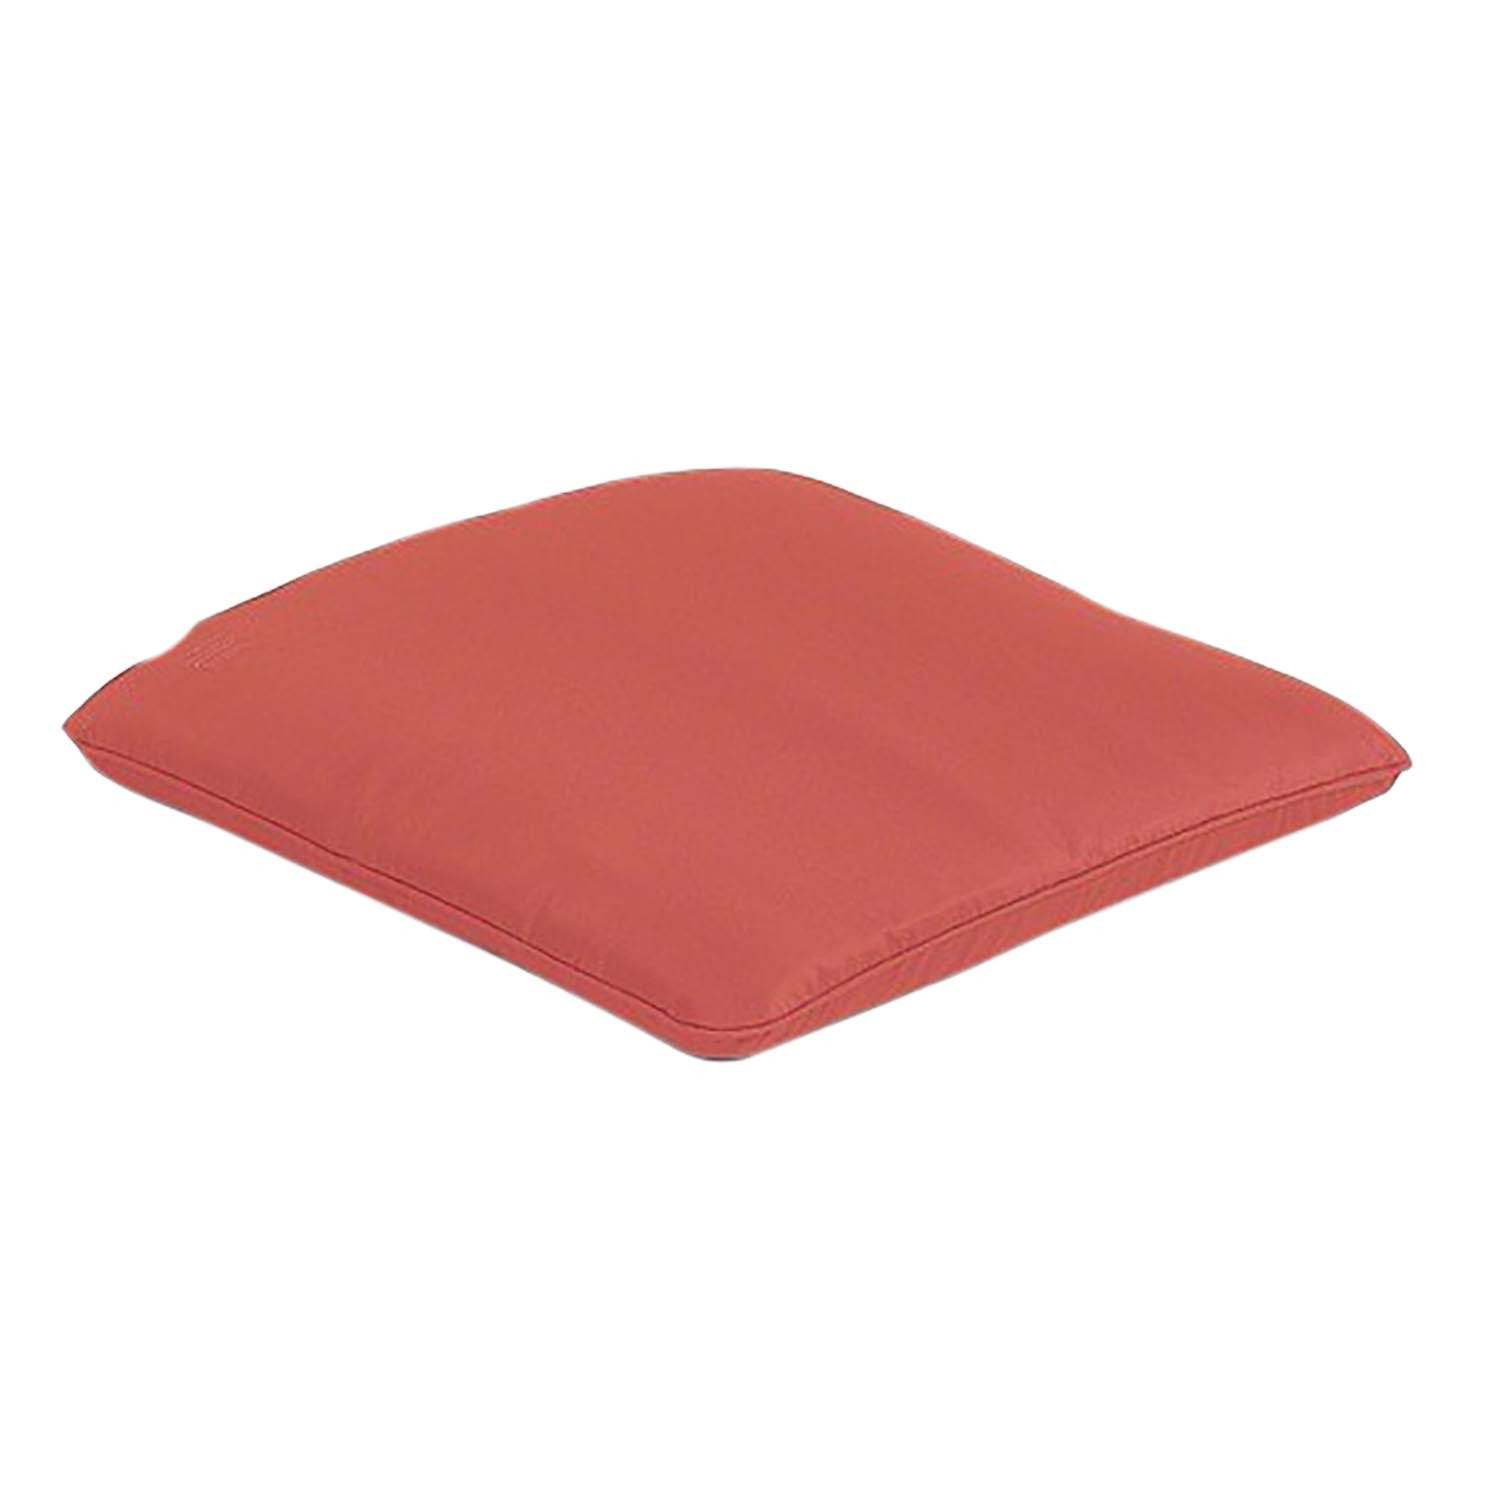 Patio Armchair Cushion - Terracotta Image